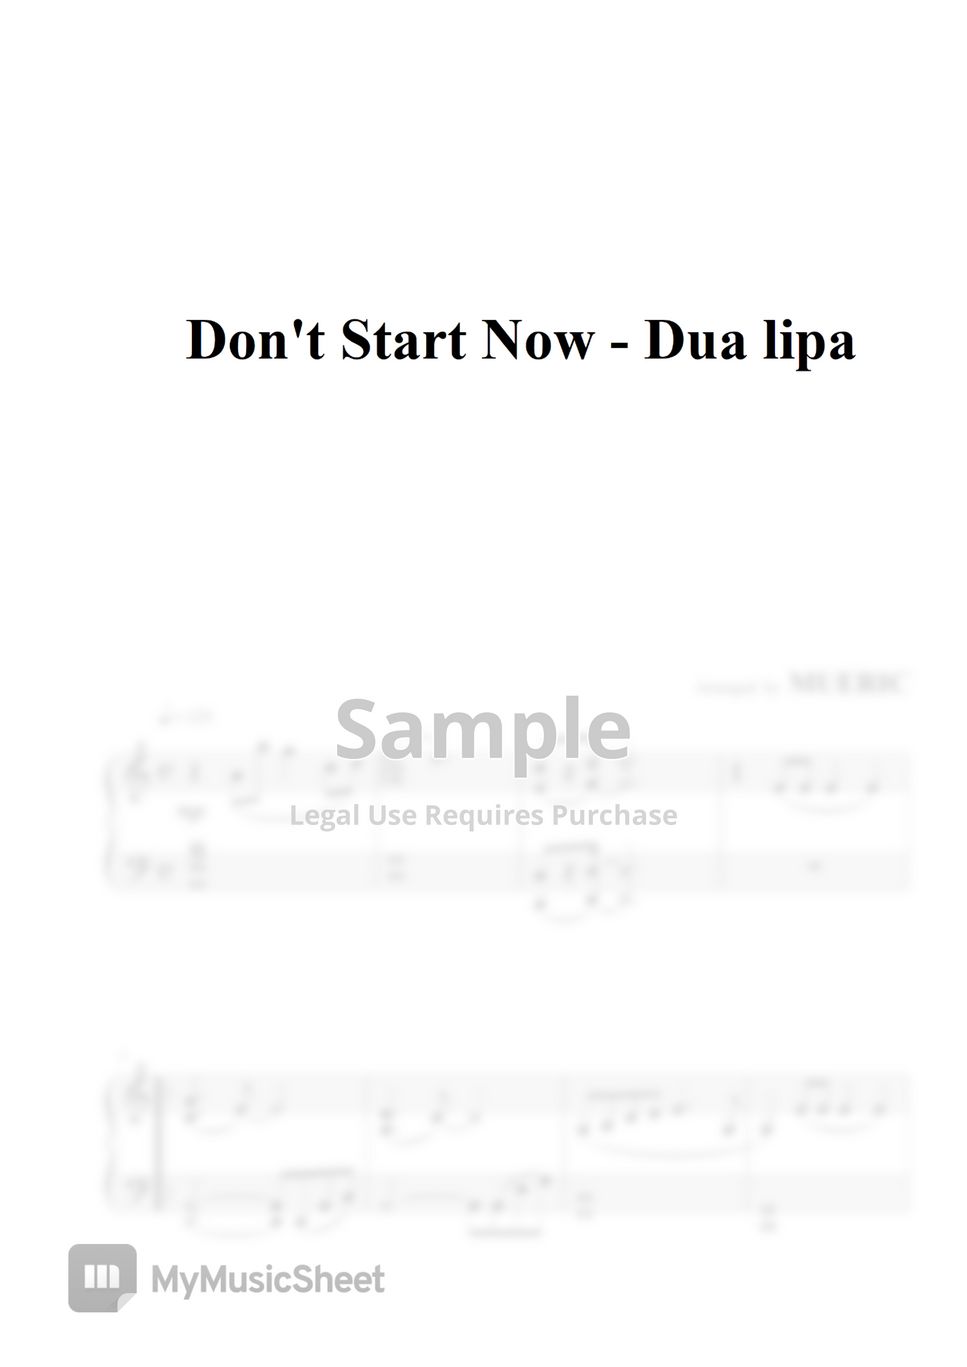 Dua lipa - Don't Start Now (Piano ver.) by MUERIC